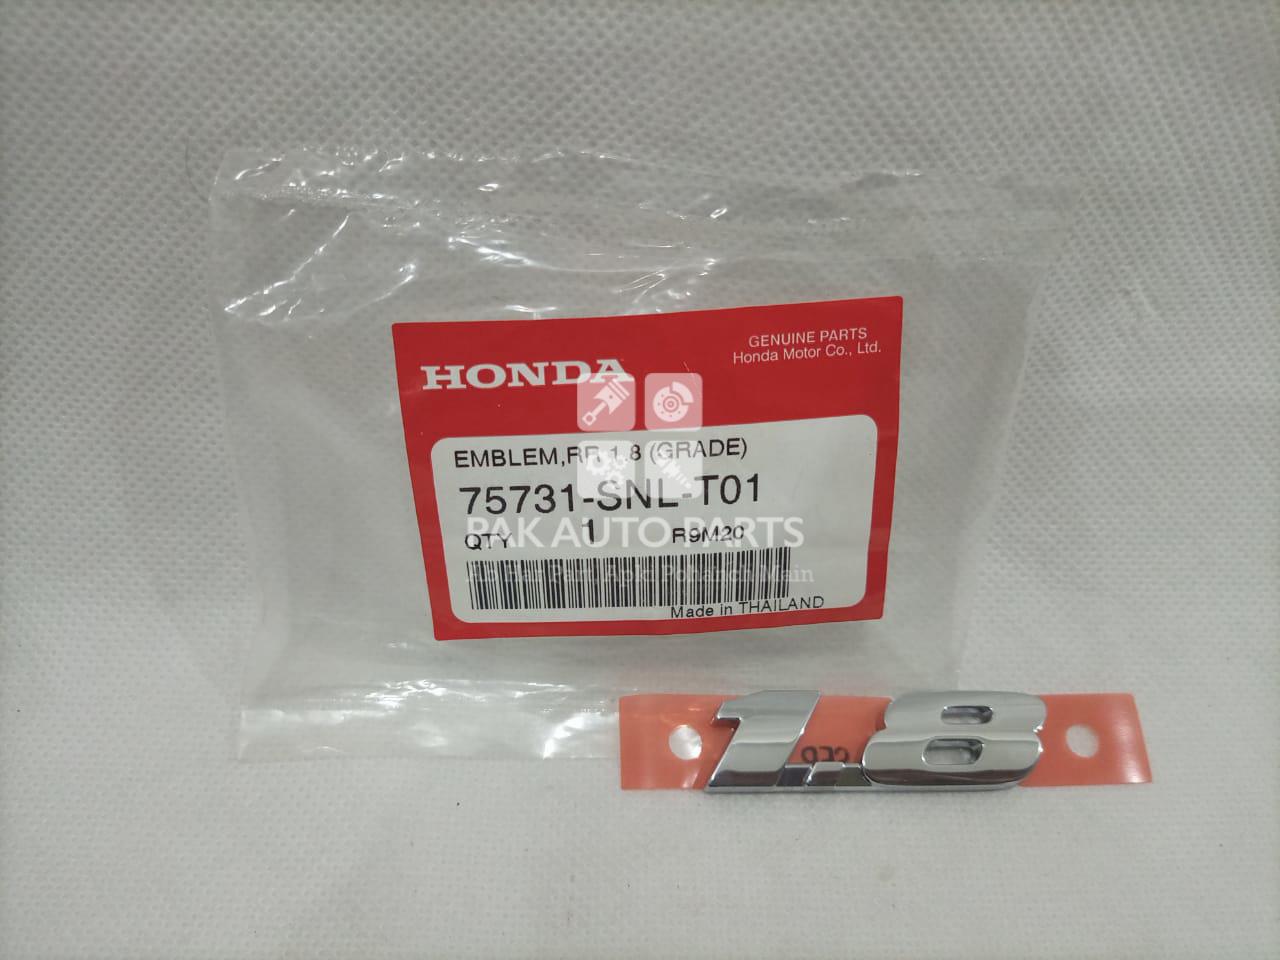 Picture of Honda Civic 2012-2015 Mono Gram